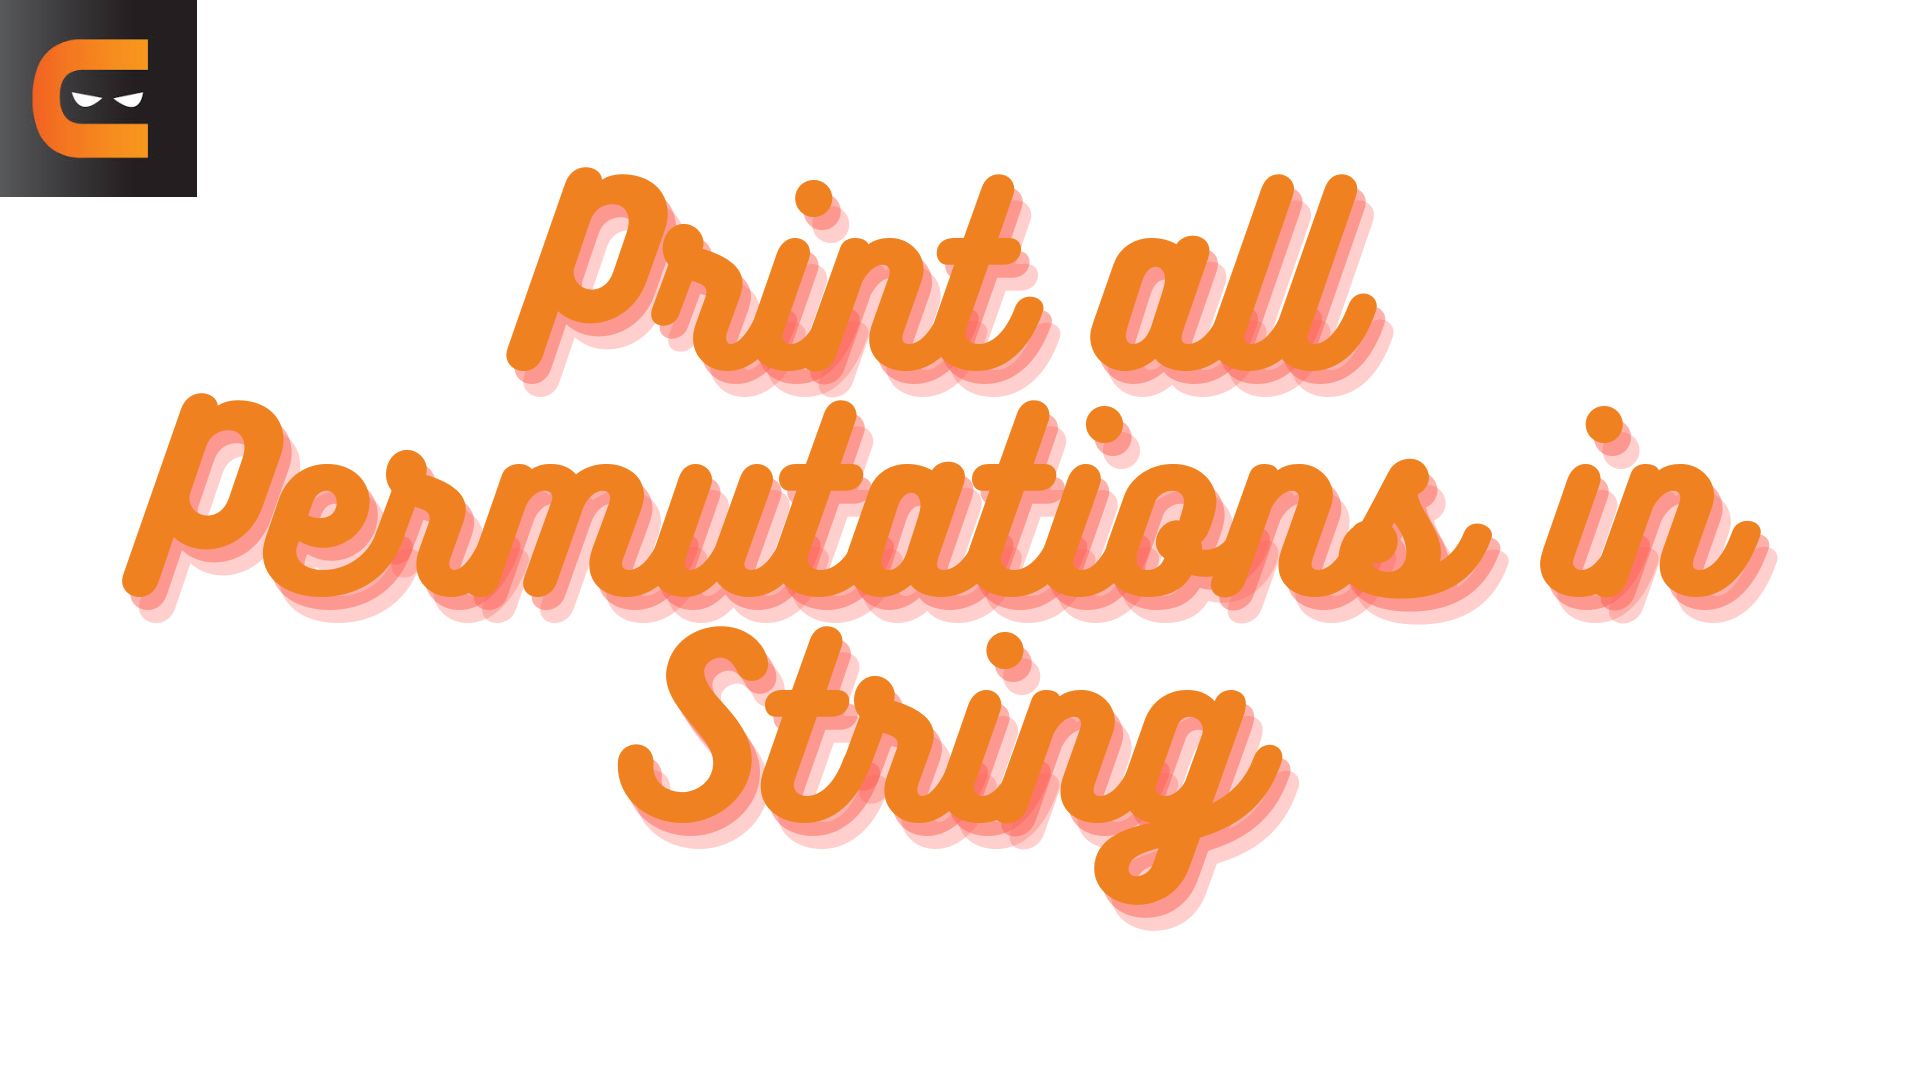 Print all Permutations in String